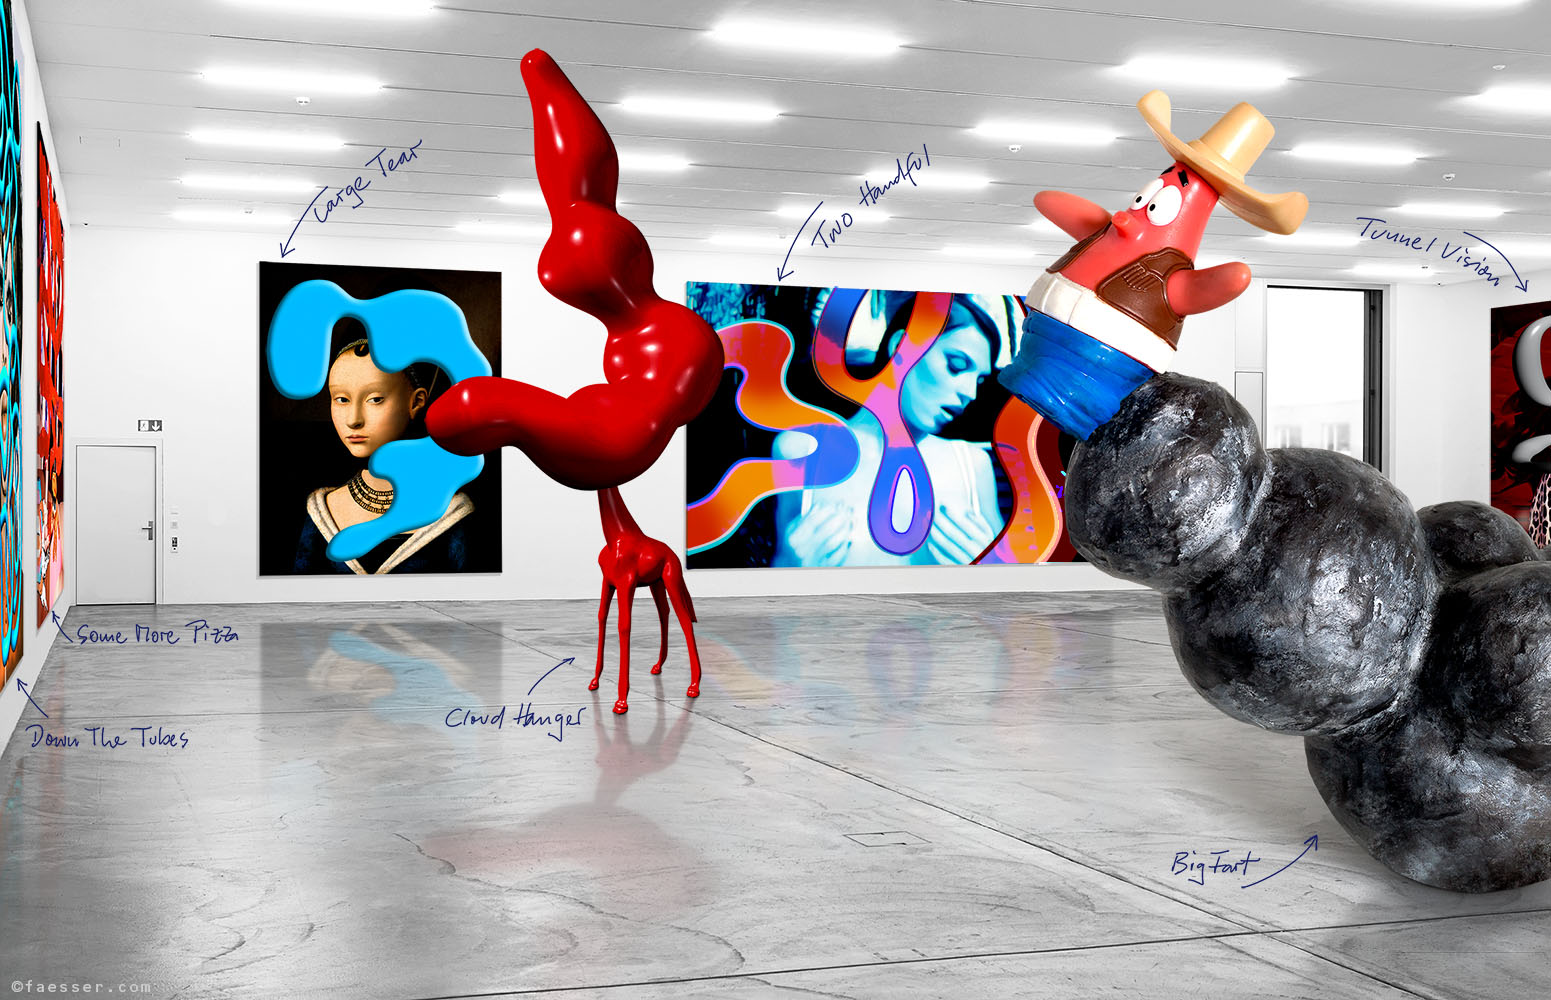 Virtual 3D exhibition at the Kunsthalle Zurich 03; artist Roland Faesser, sculptor and painter 2020